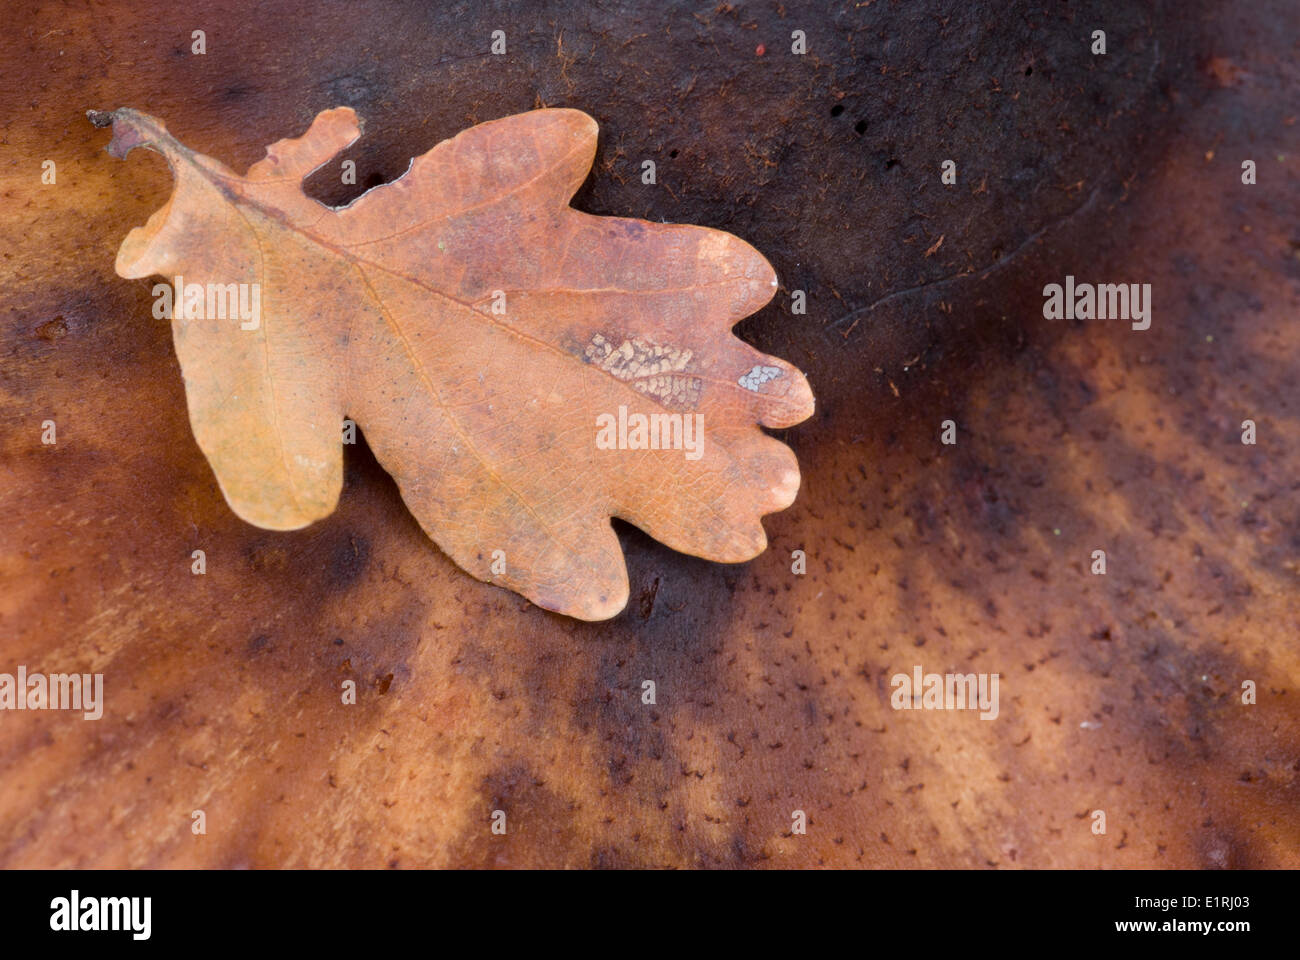 Autumn leaf of oak on cap of mushroom Stock Photo